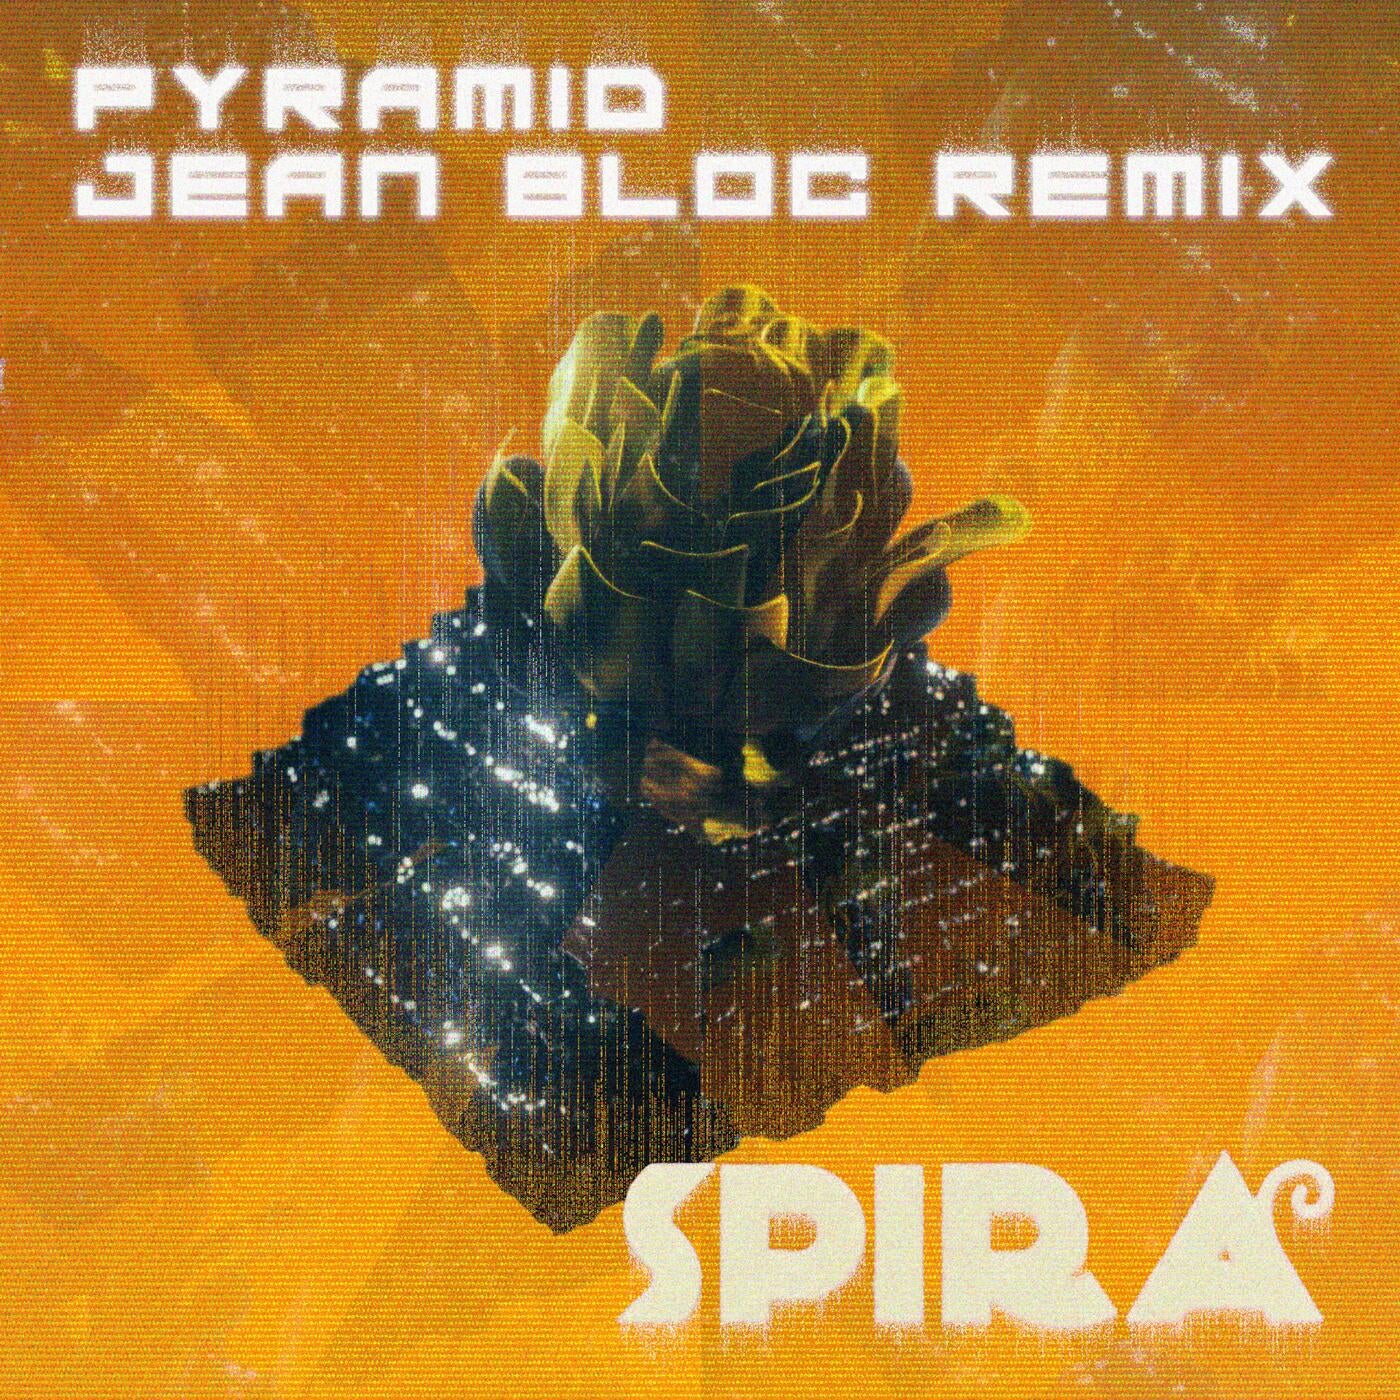 Pyramid Remix